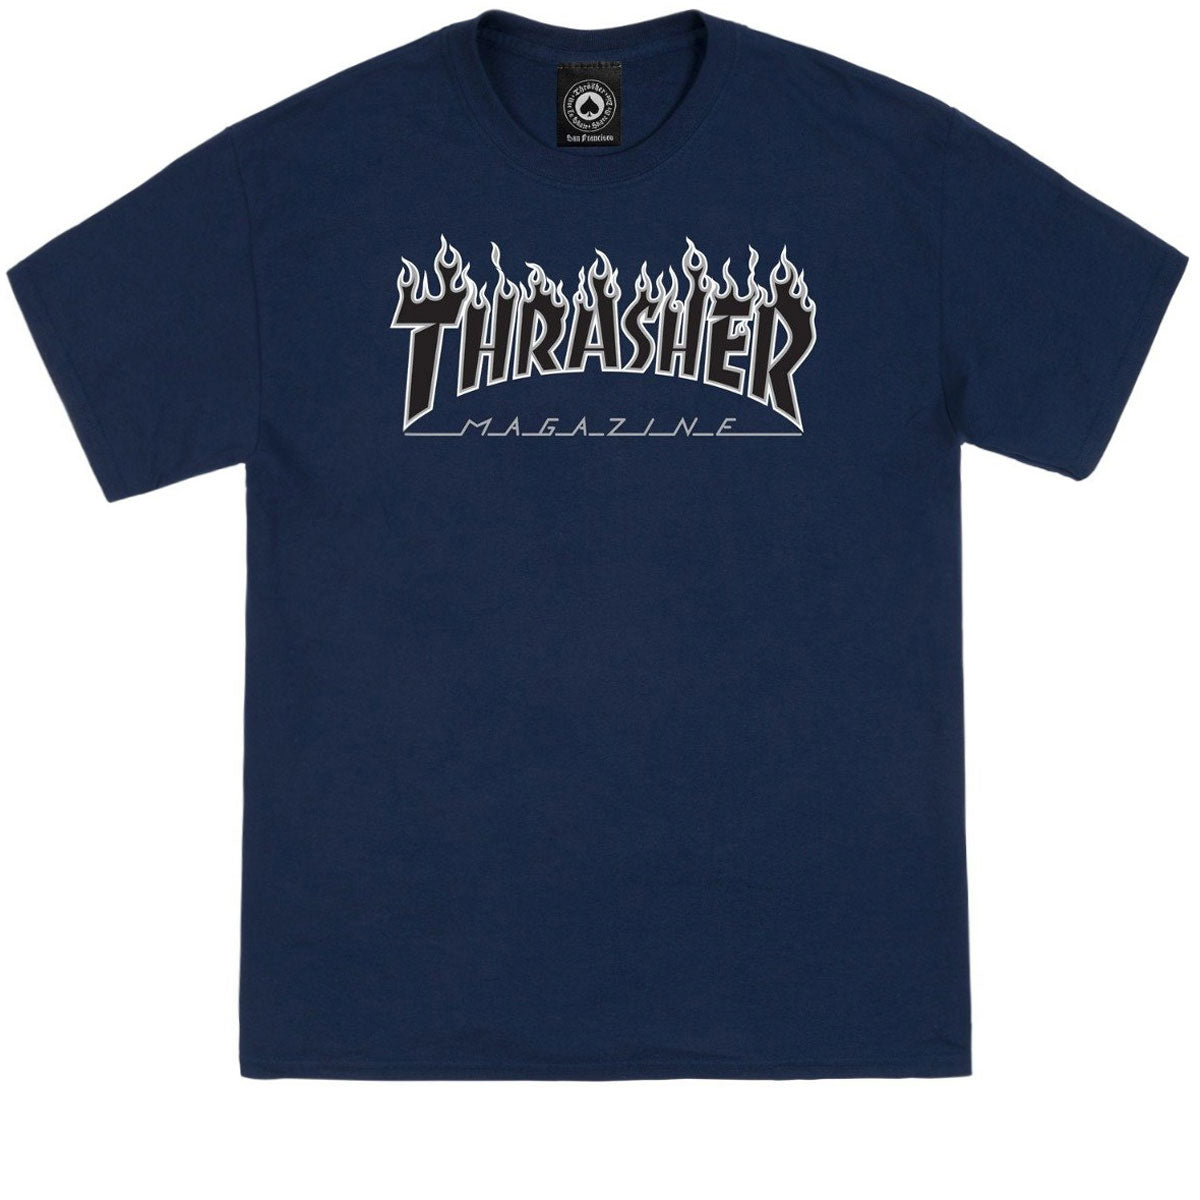 Thrasher Flame Logo T-Shirt - Navy/Black image 1